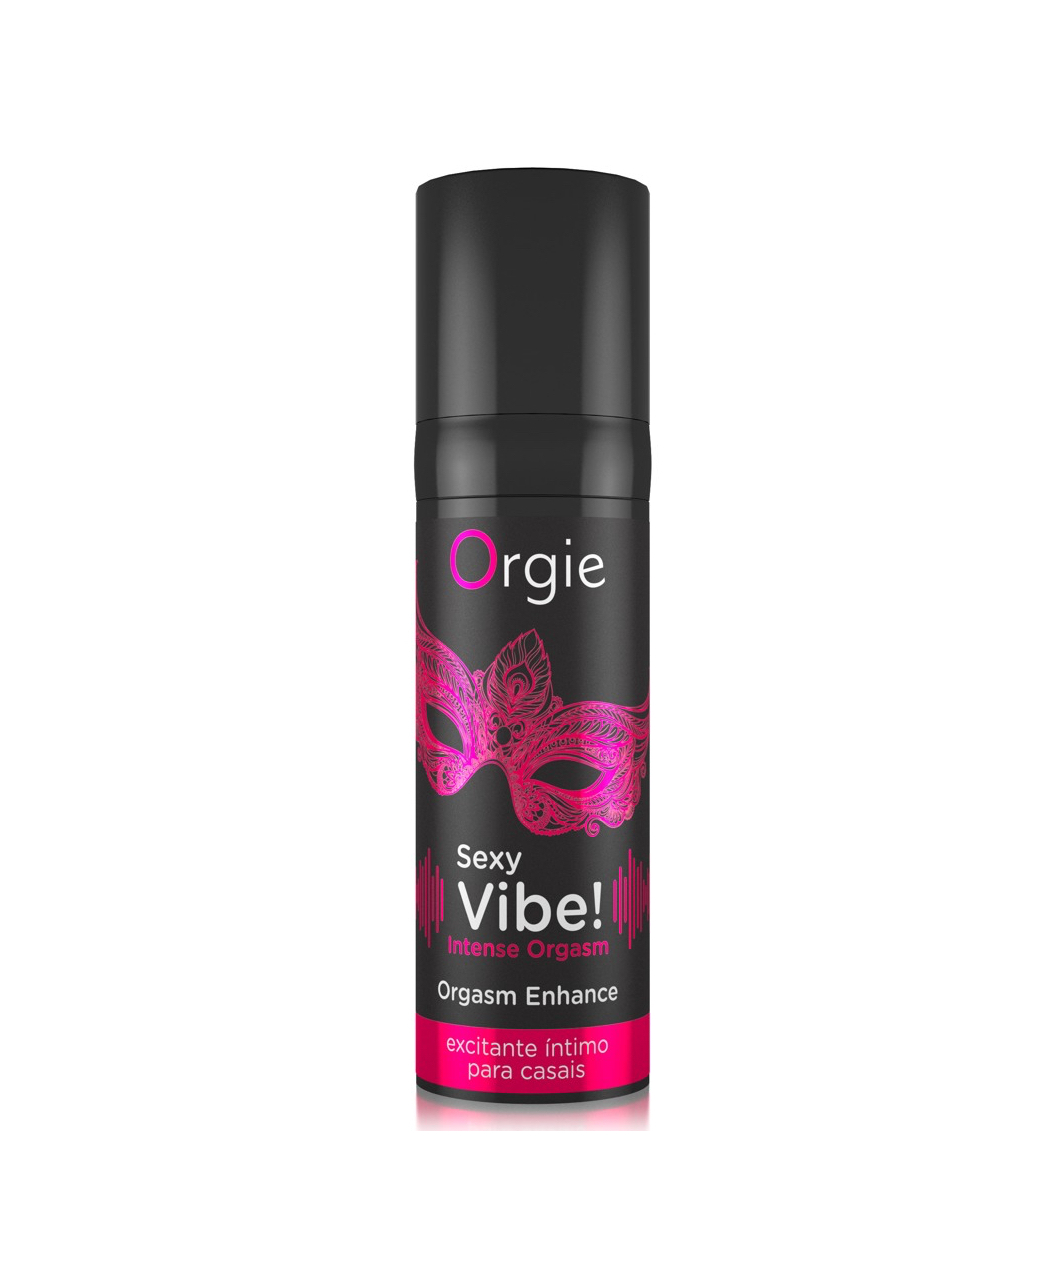 Orgie Orgasm Enhancing Gel for Couples (15 ml)